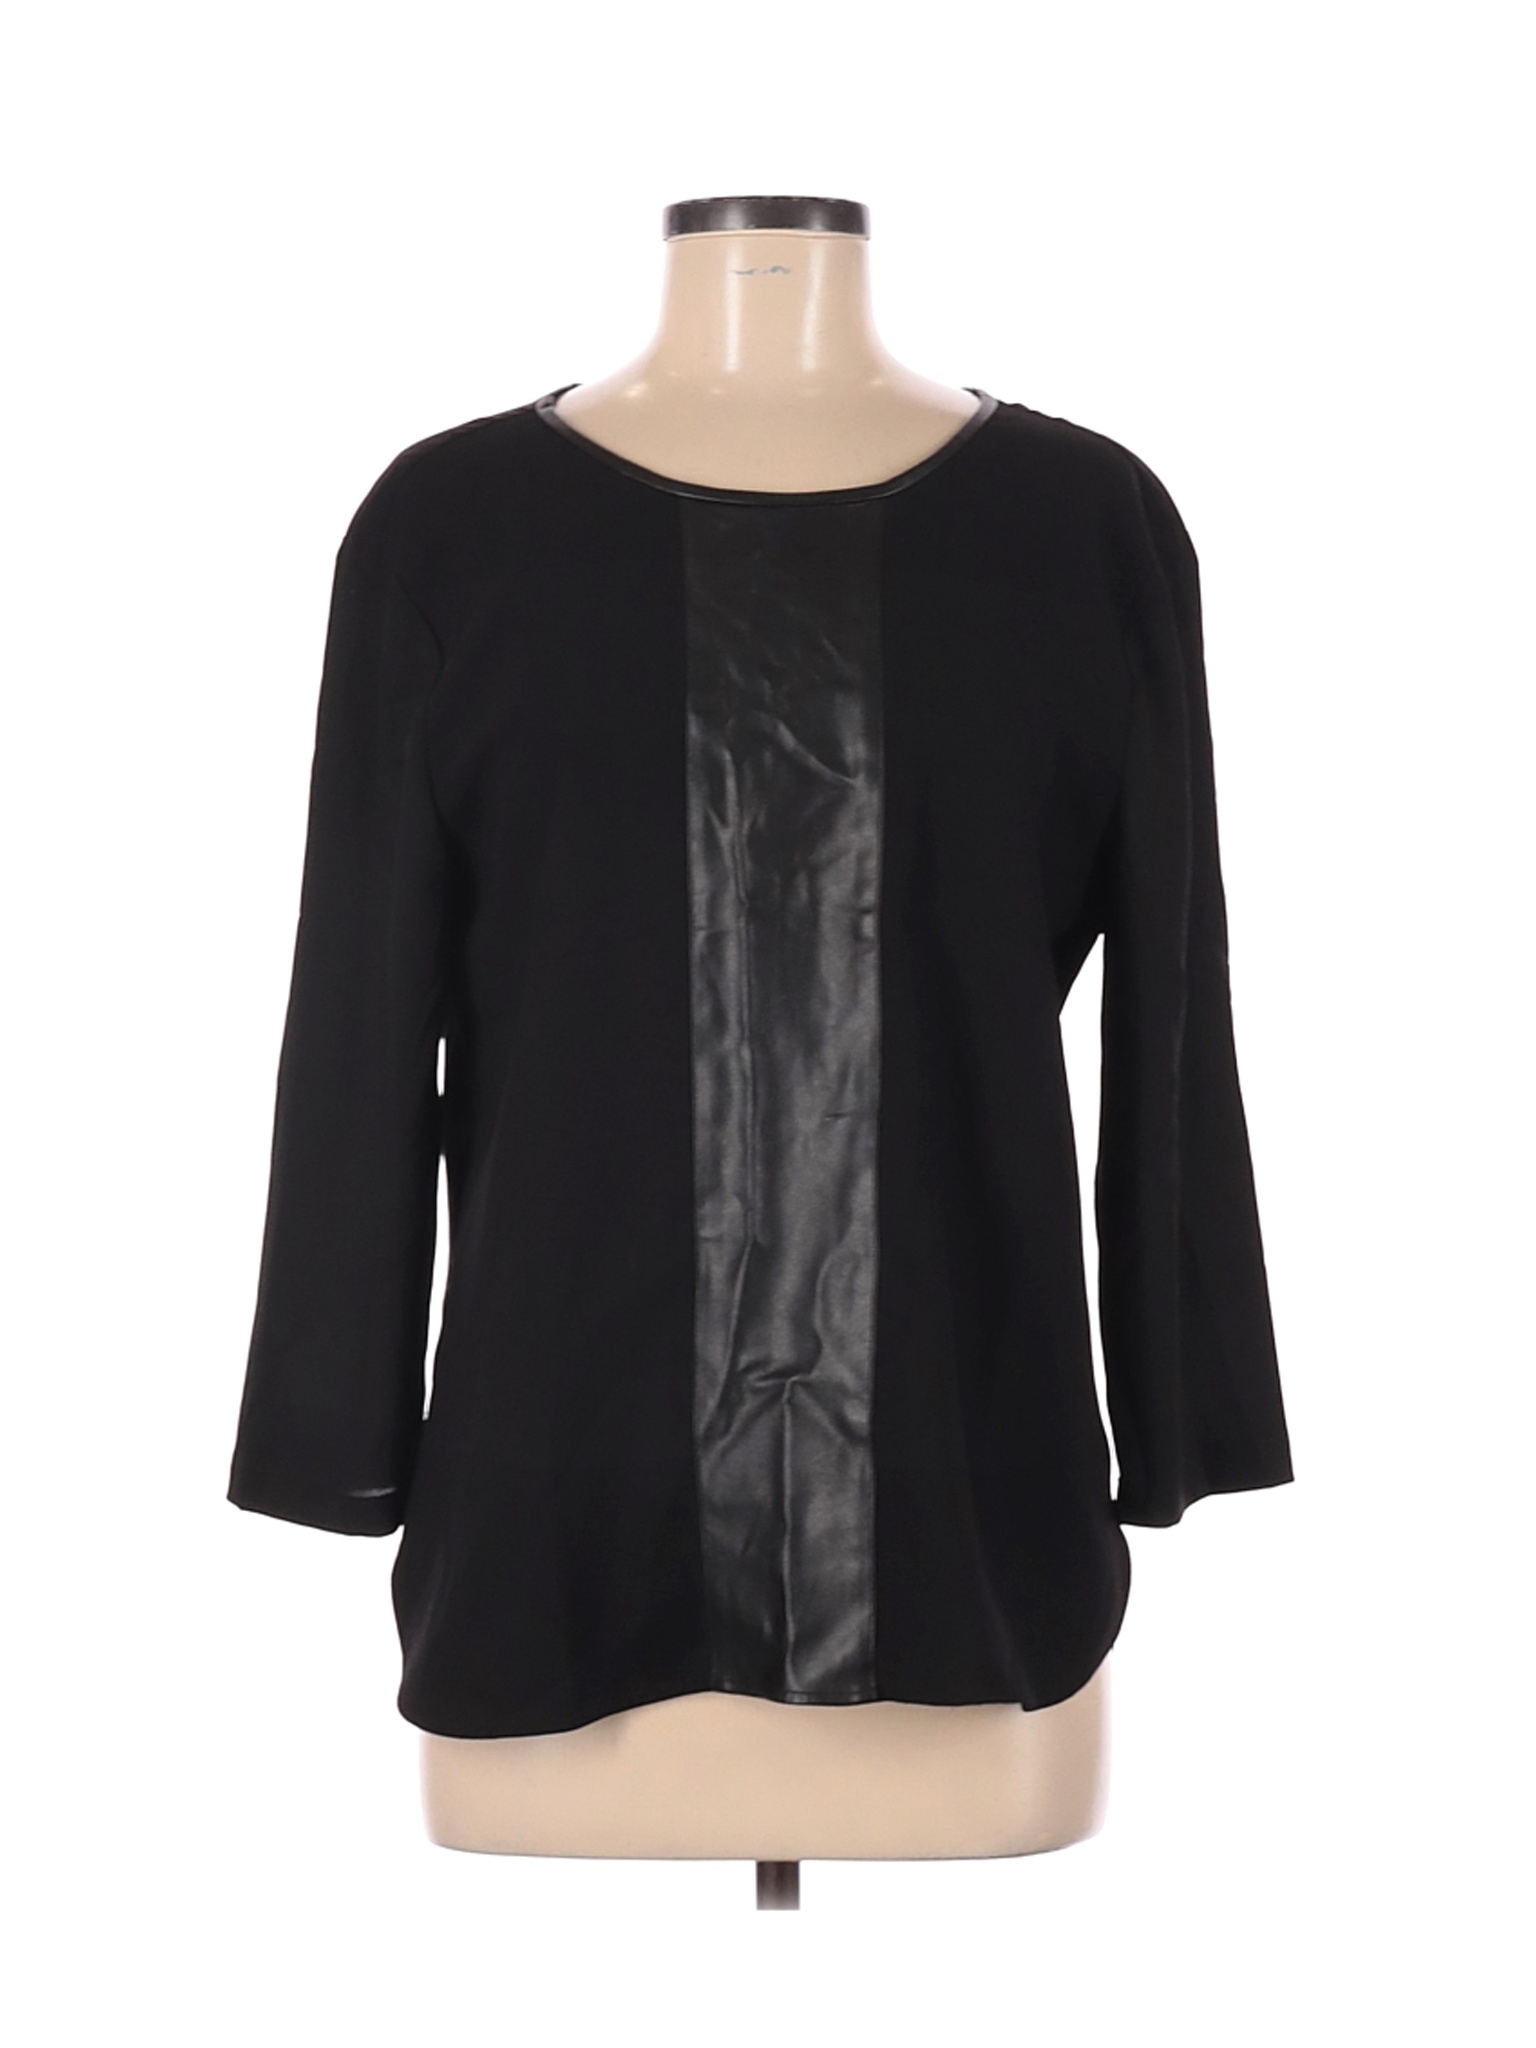 Ann Taylor Women Black Long Sleeve Blouse M | eBay